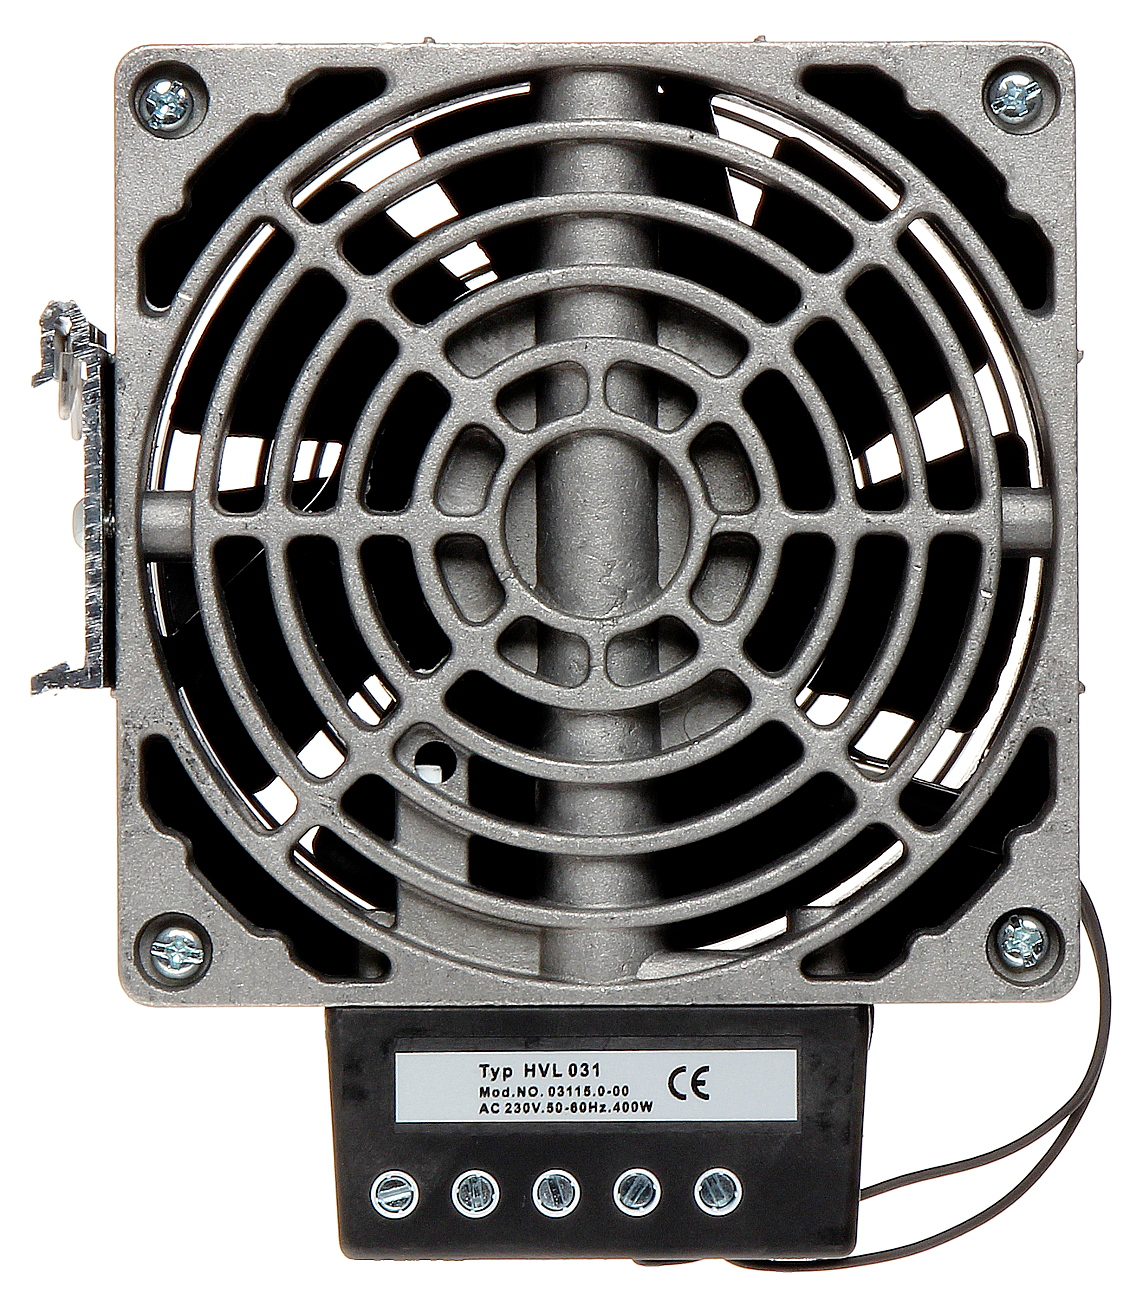 HORKOVZDUŠNÝ VENTILÁTOR HVL-031-400W - Polovodičové ohřívače a teplovzdušné  ventilátory - Delta